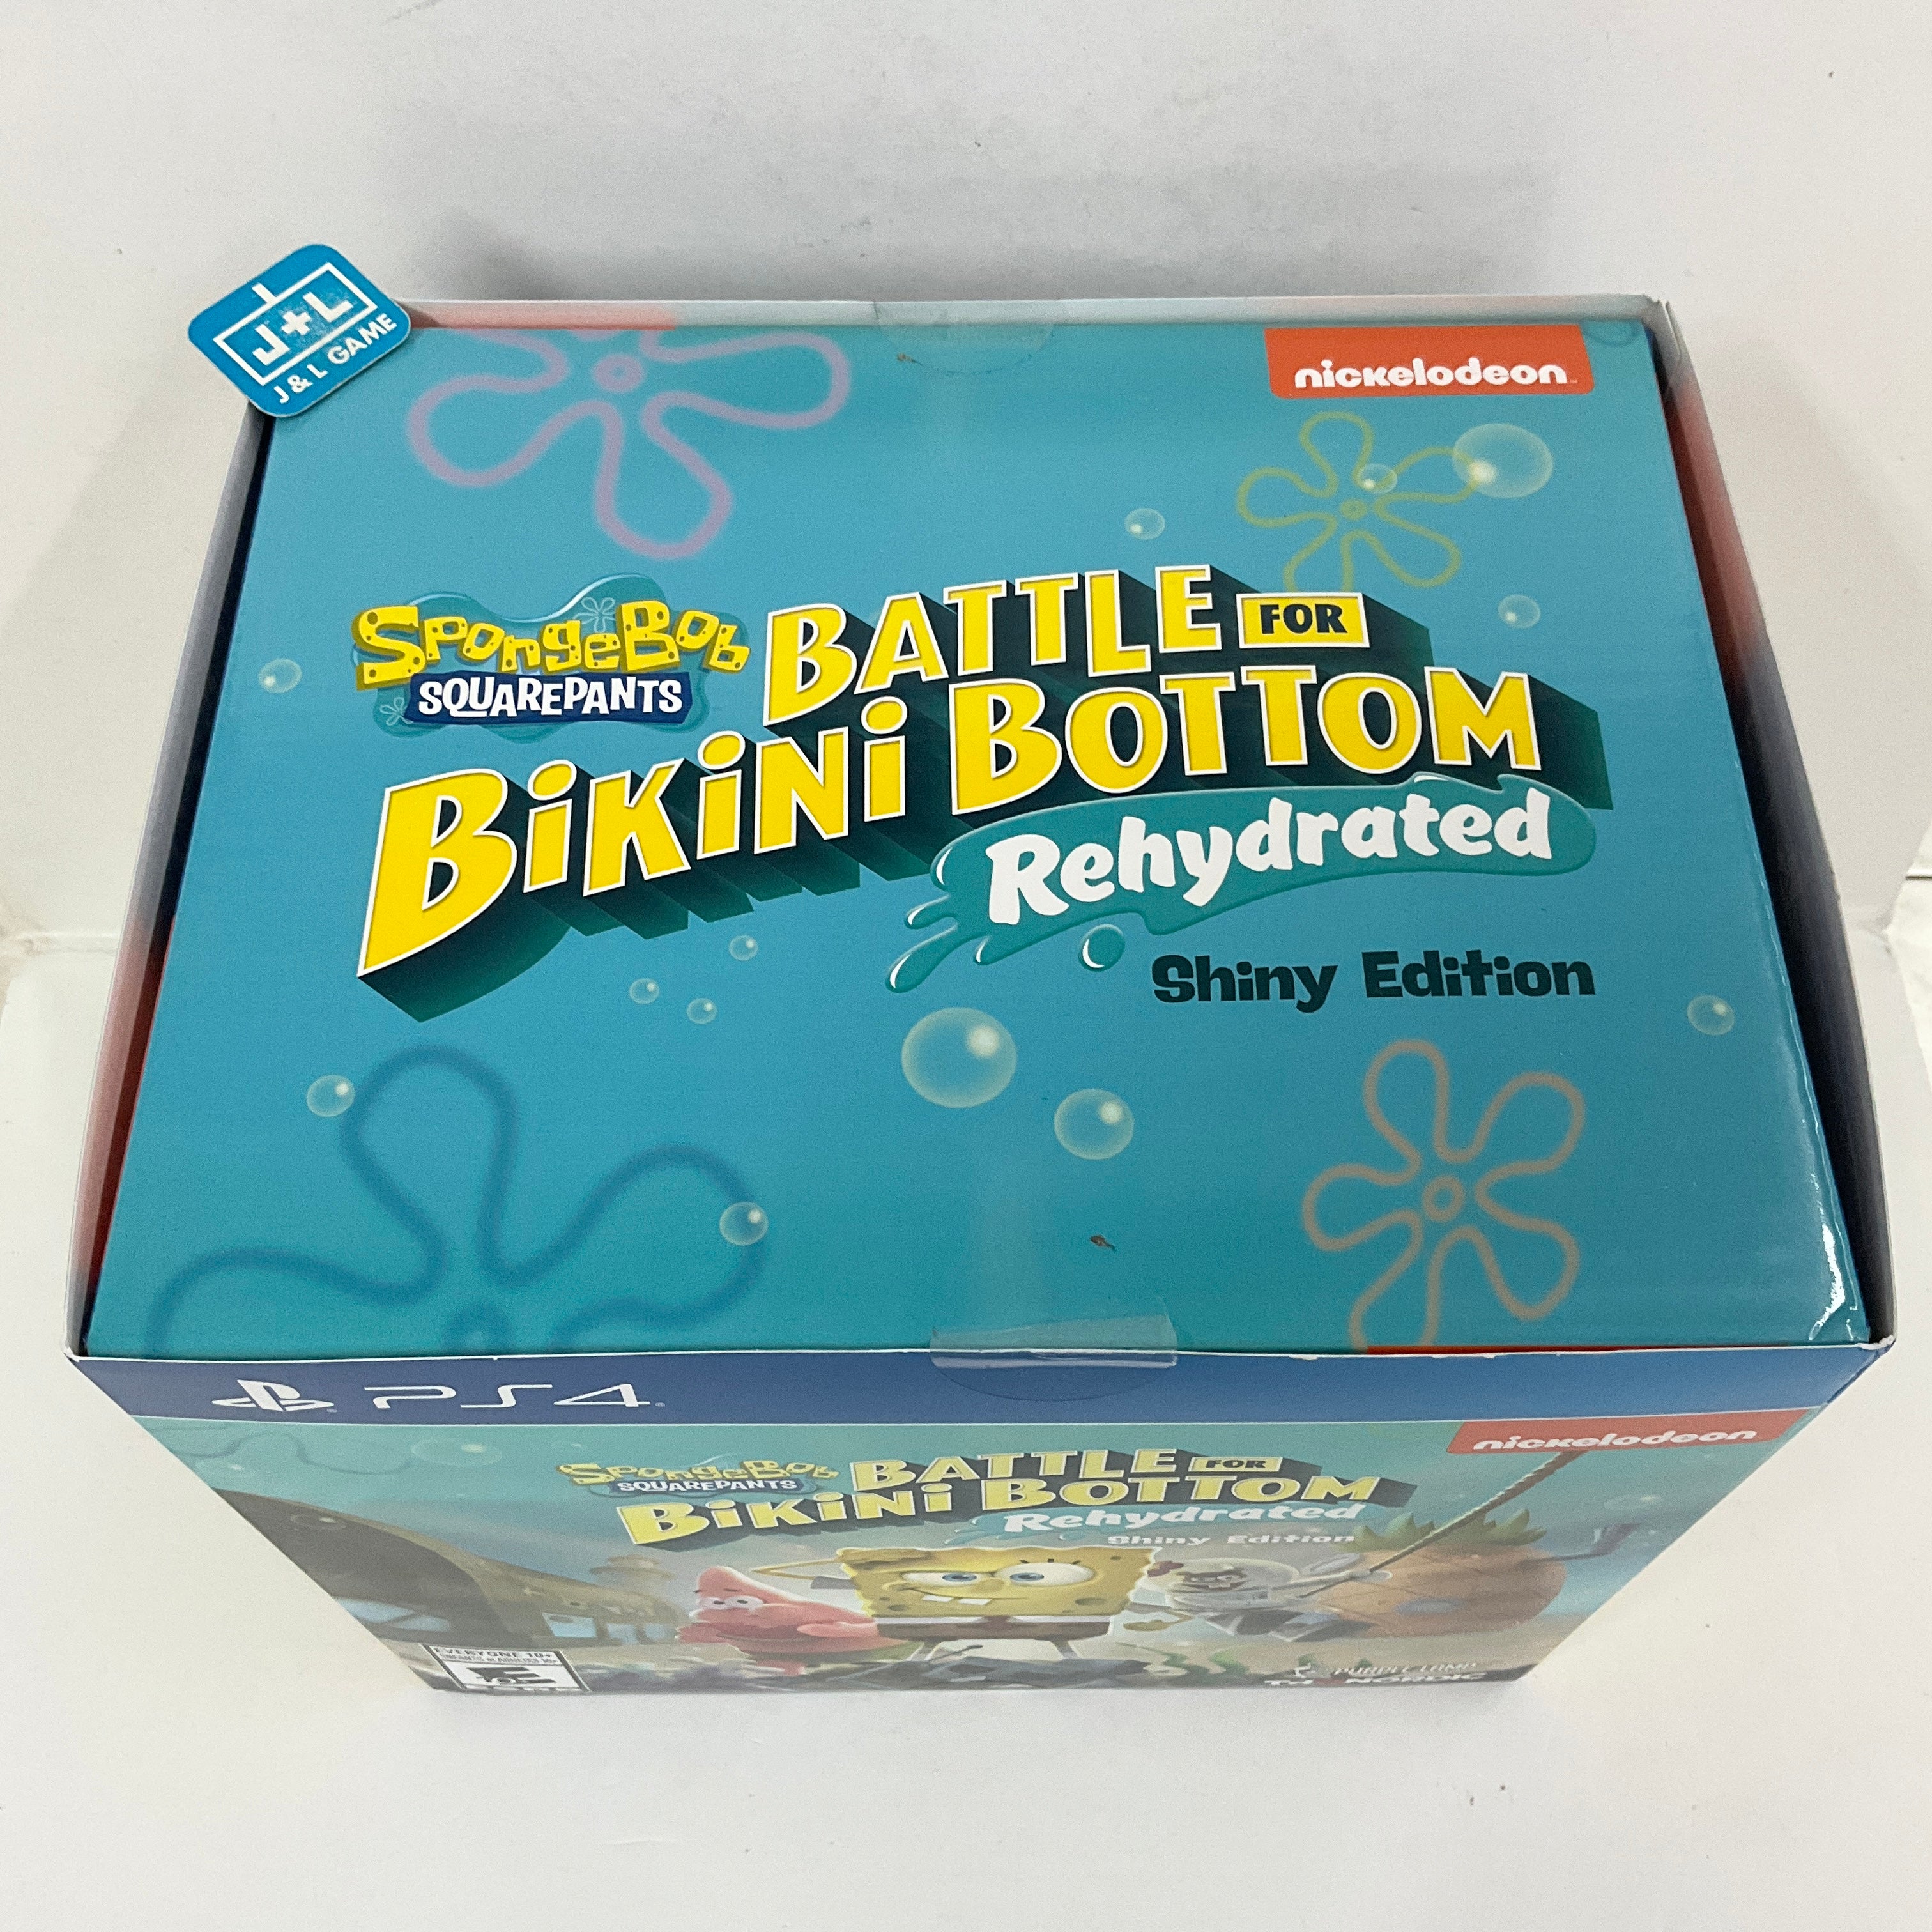 Spongebob Squarepants: Battle for Bikini Bottom Rehydrated (Shiny Edition) - (PS4) PlayStation 4 Video Games THQ Nordic   